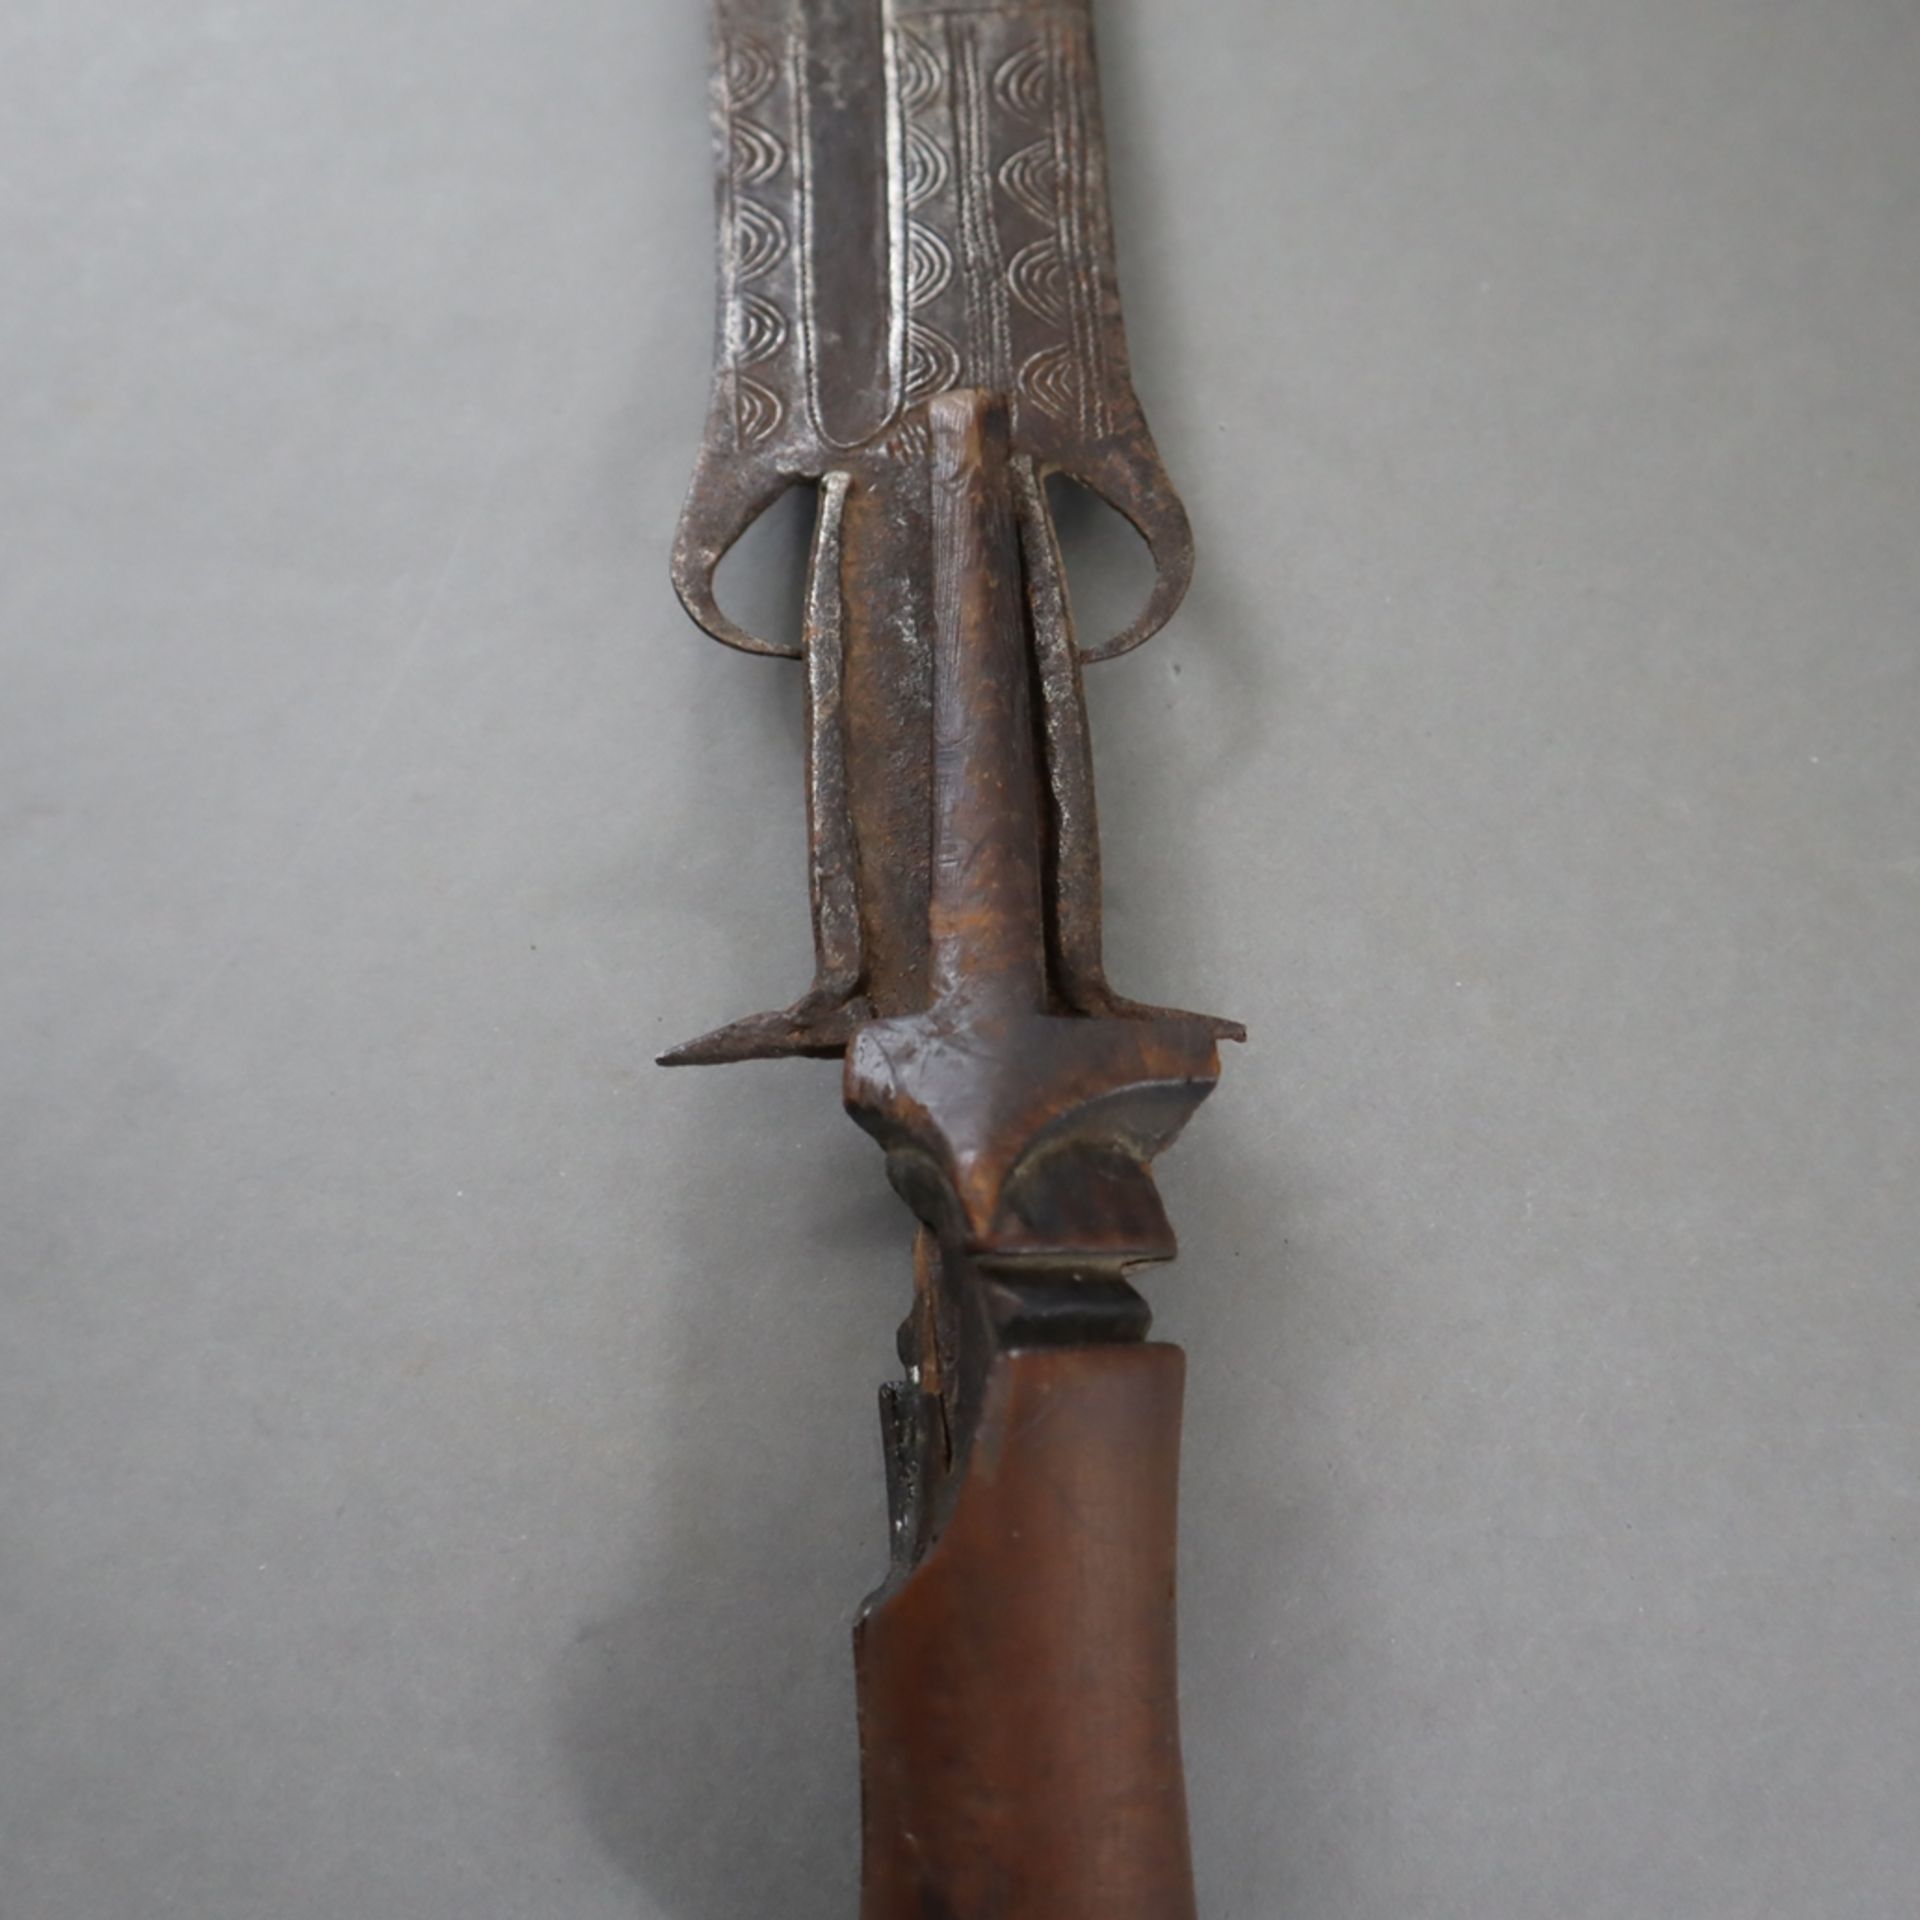 Kurzschwert "ntsakh" - Zentralafrika, Fang, blattförmige, gegradete Klinge, am Ansatz spitze, haken - Image 5 of 7